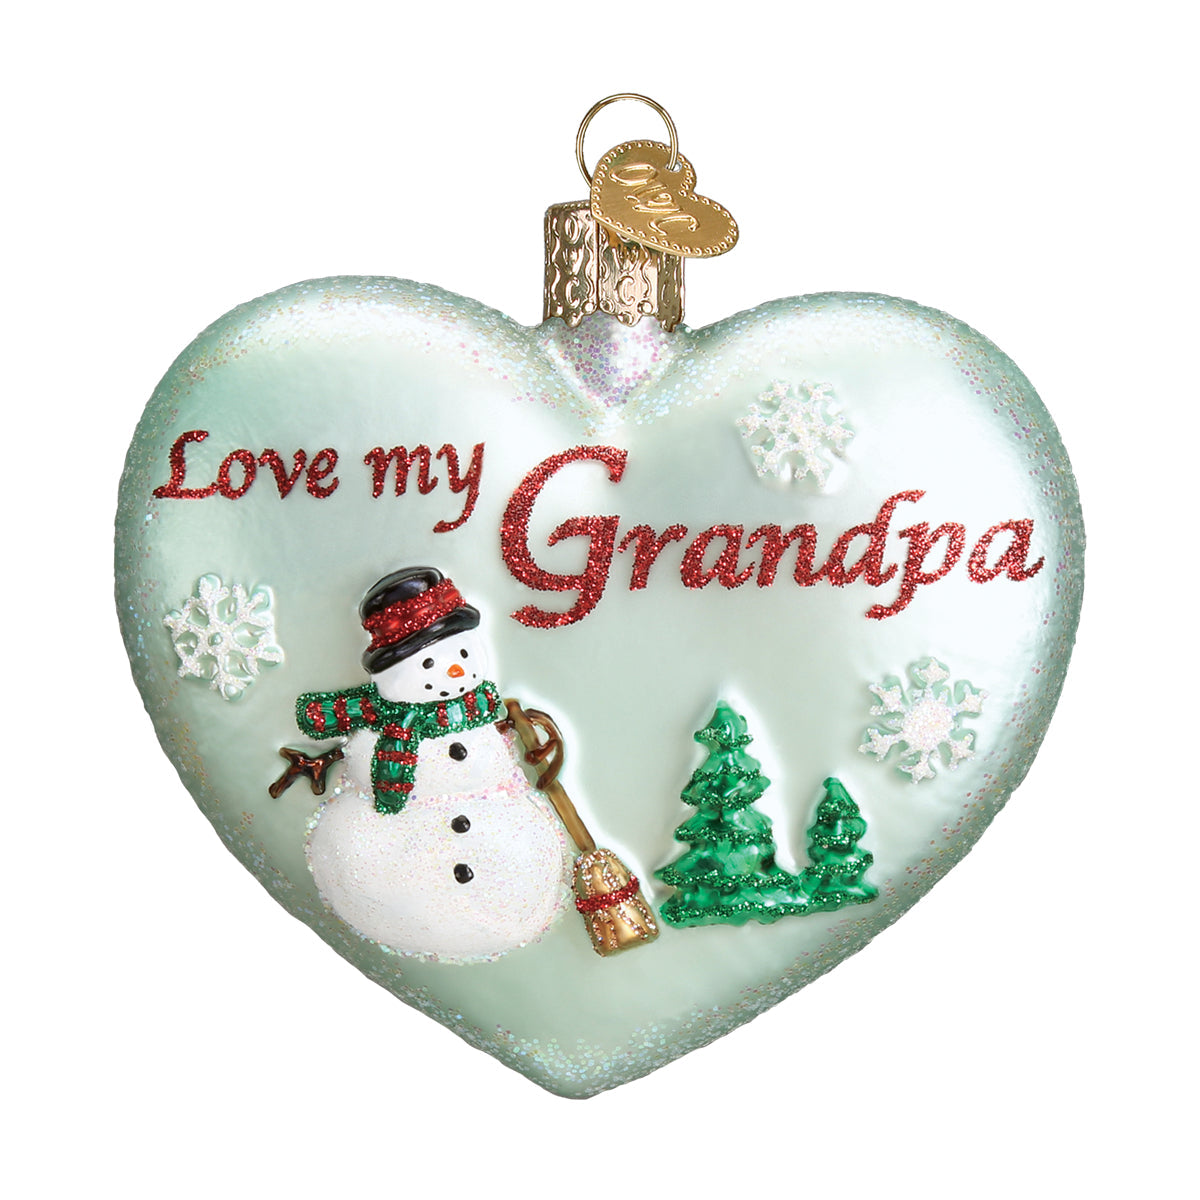 Old World Christmas Grandpa Heart Ornament    